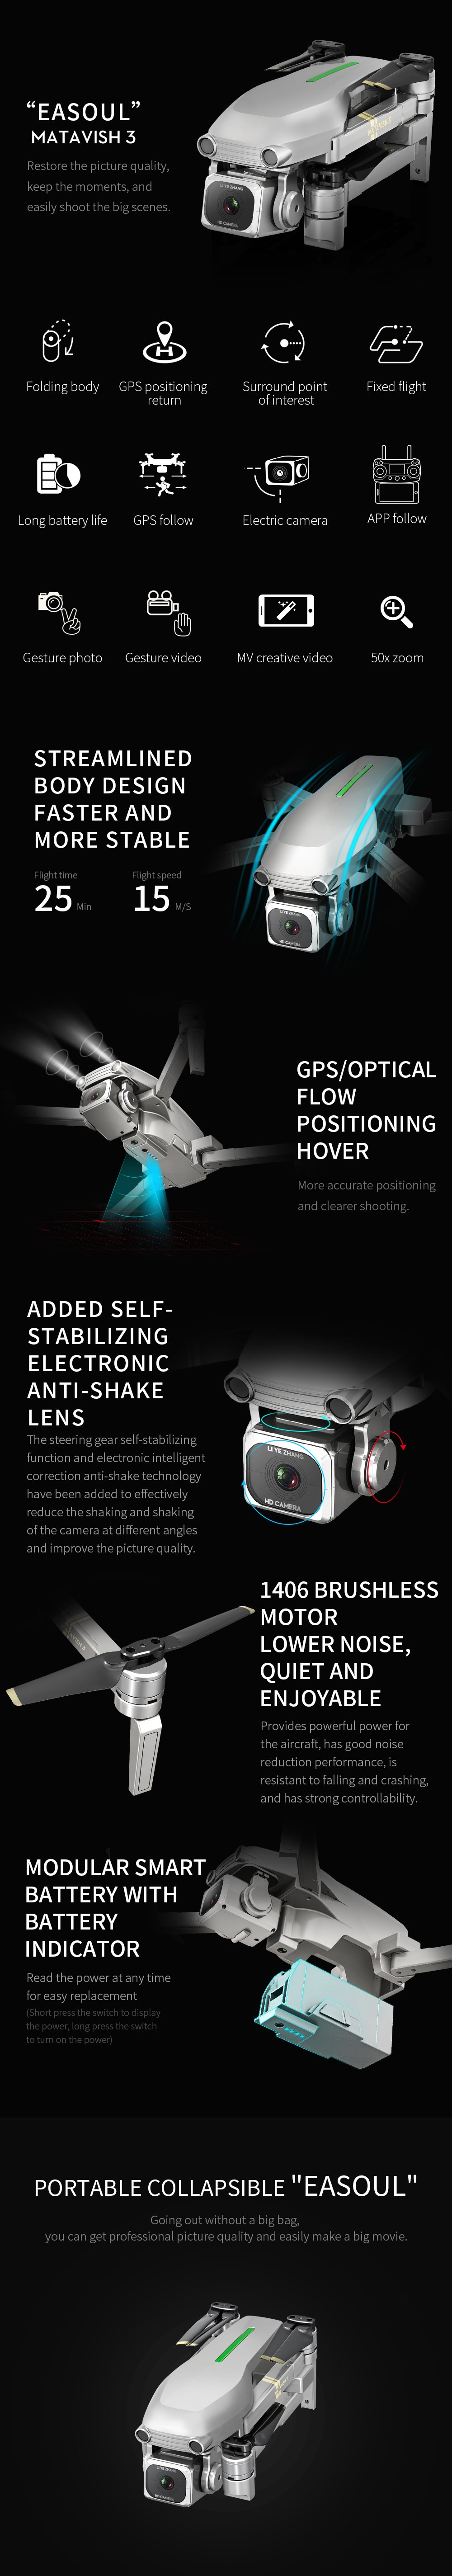 L109-S MATAVISH3 5G Anti-shake Aerial Drone With 4K 1080P HD Camera 50X Zoom GPS Foldable Brushless RC Quadcopter 8